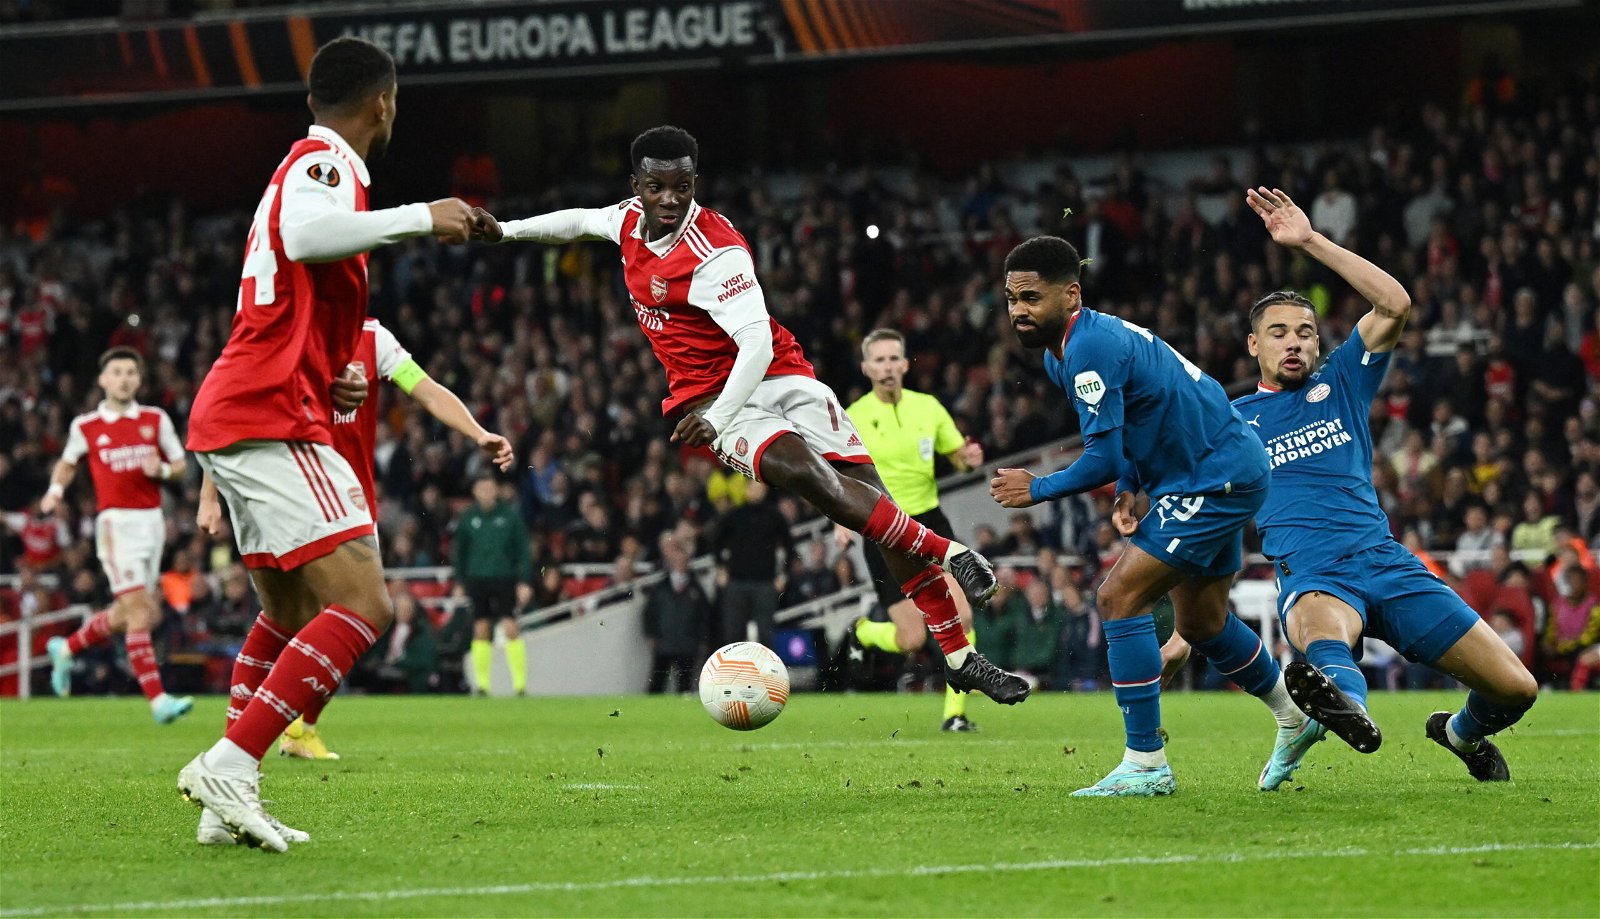 Arsenal's Eddie Nketiah takes a shot